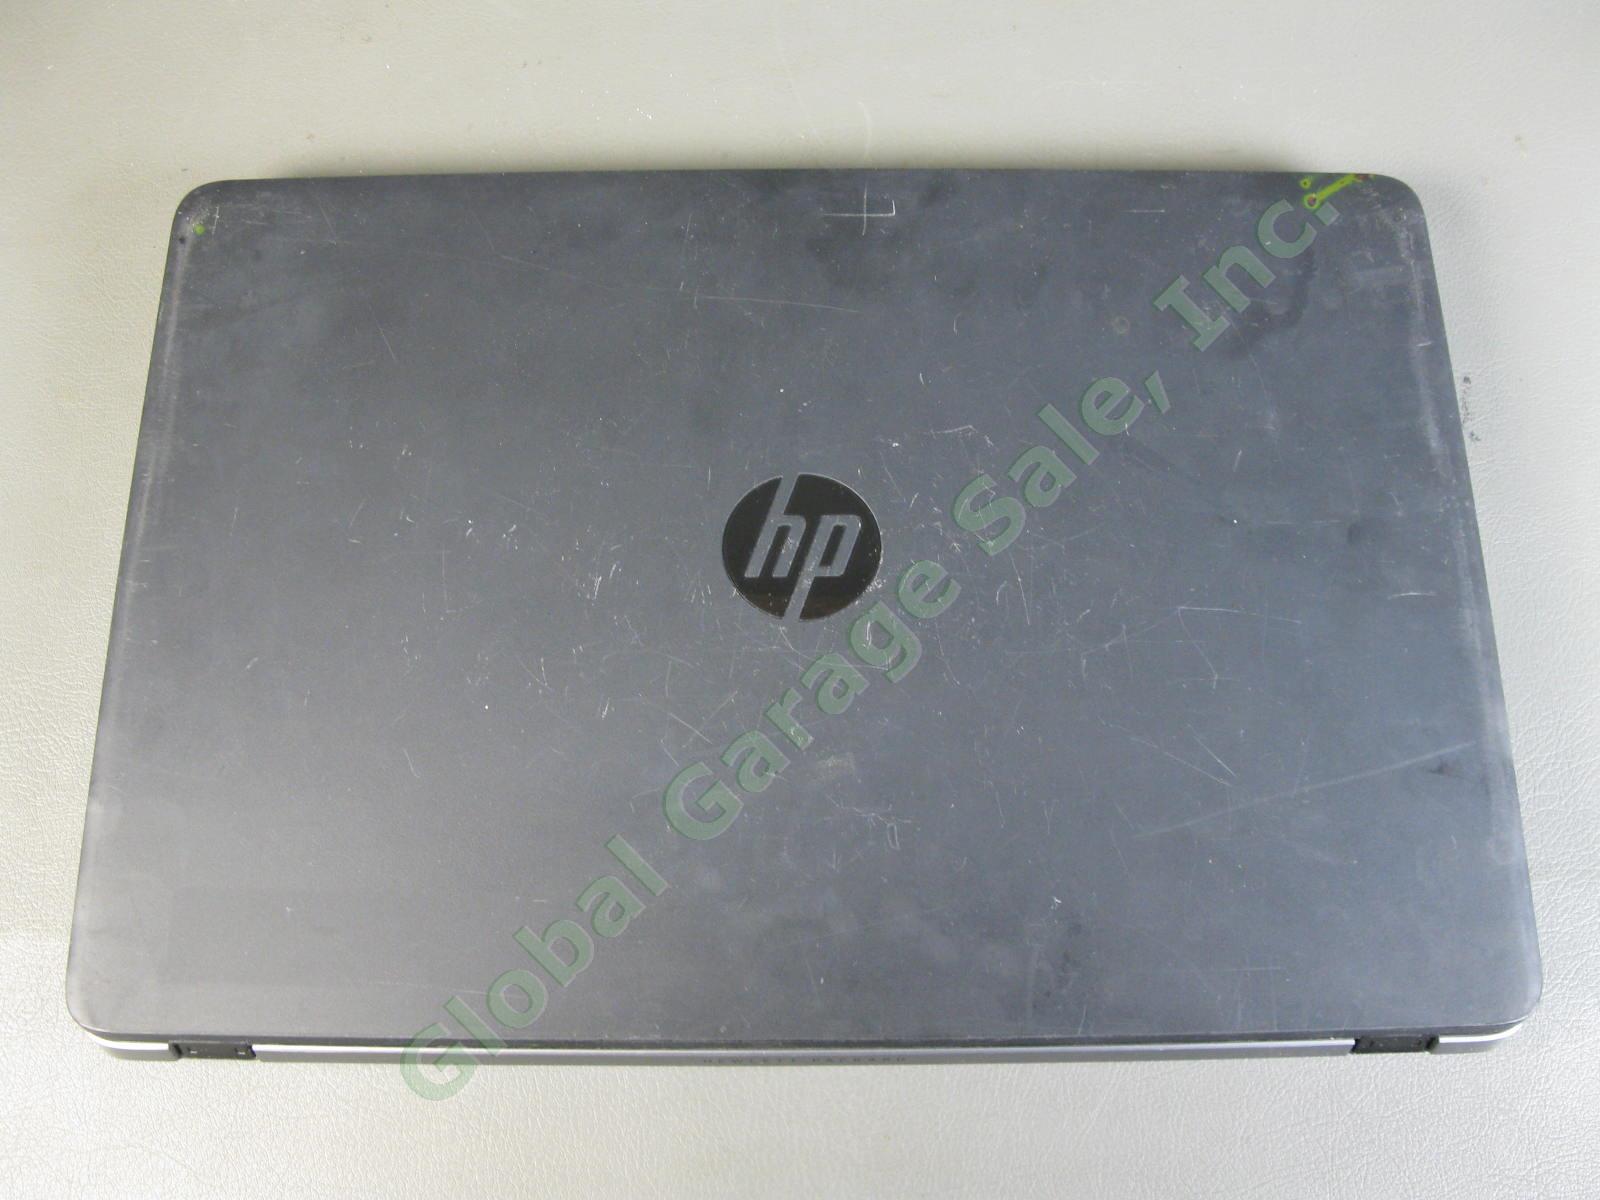 HP ProBook 450 G1 Laptop Computer i5-4200M 4GB 500GB Win10 WIFI DVD Webcam Power 6